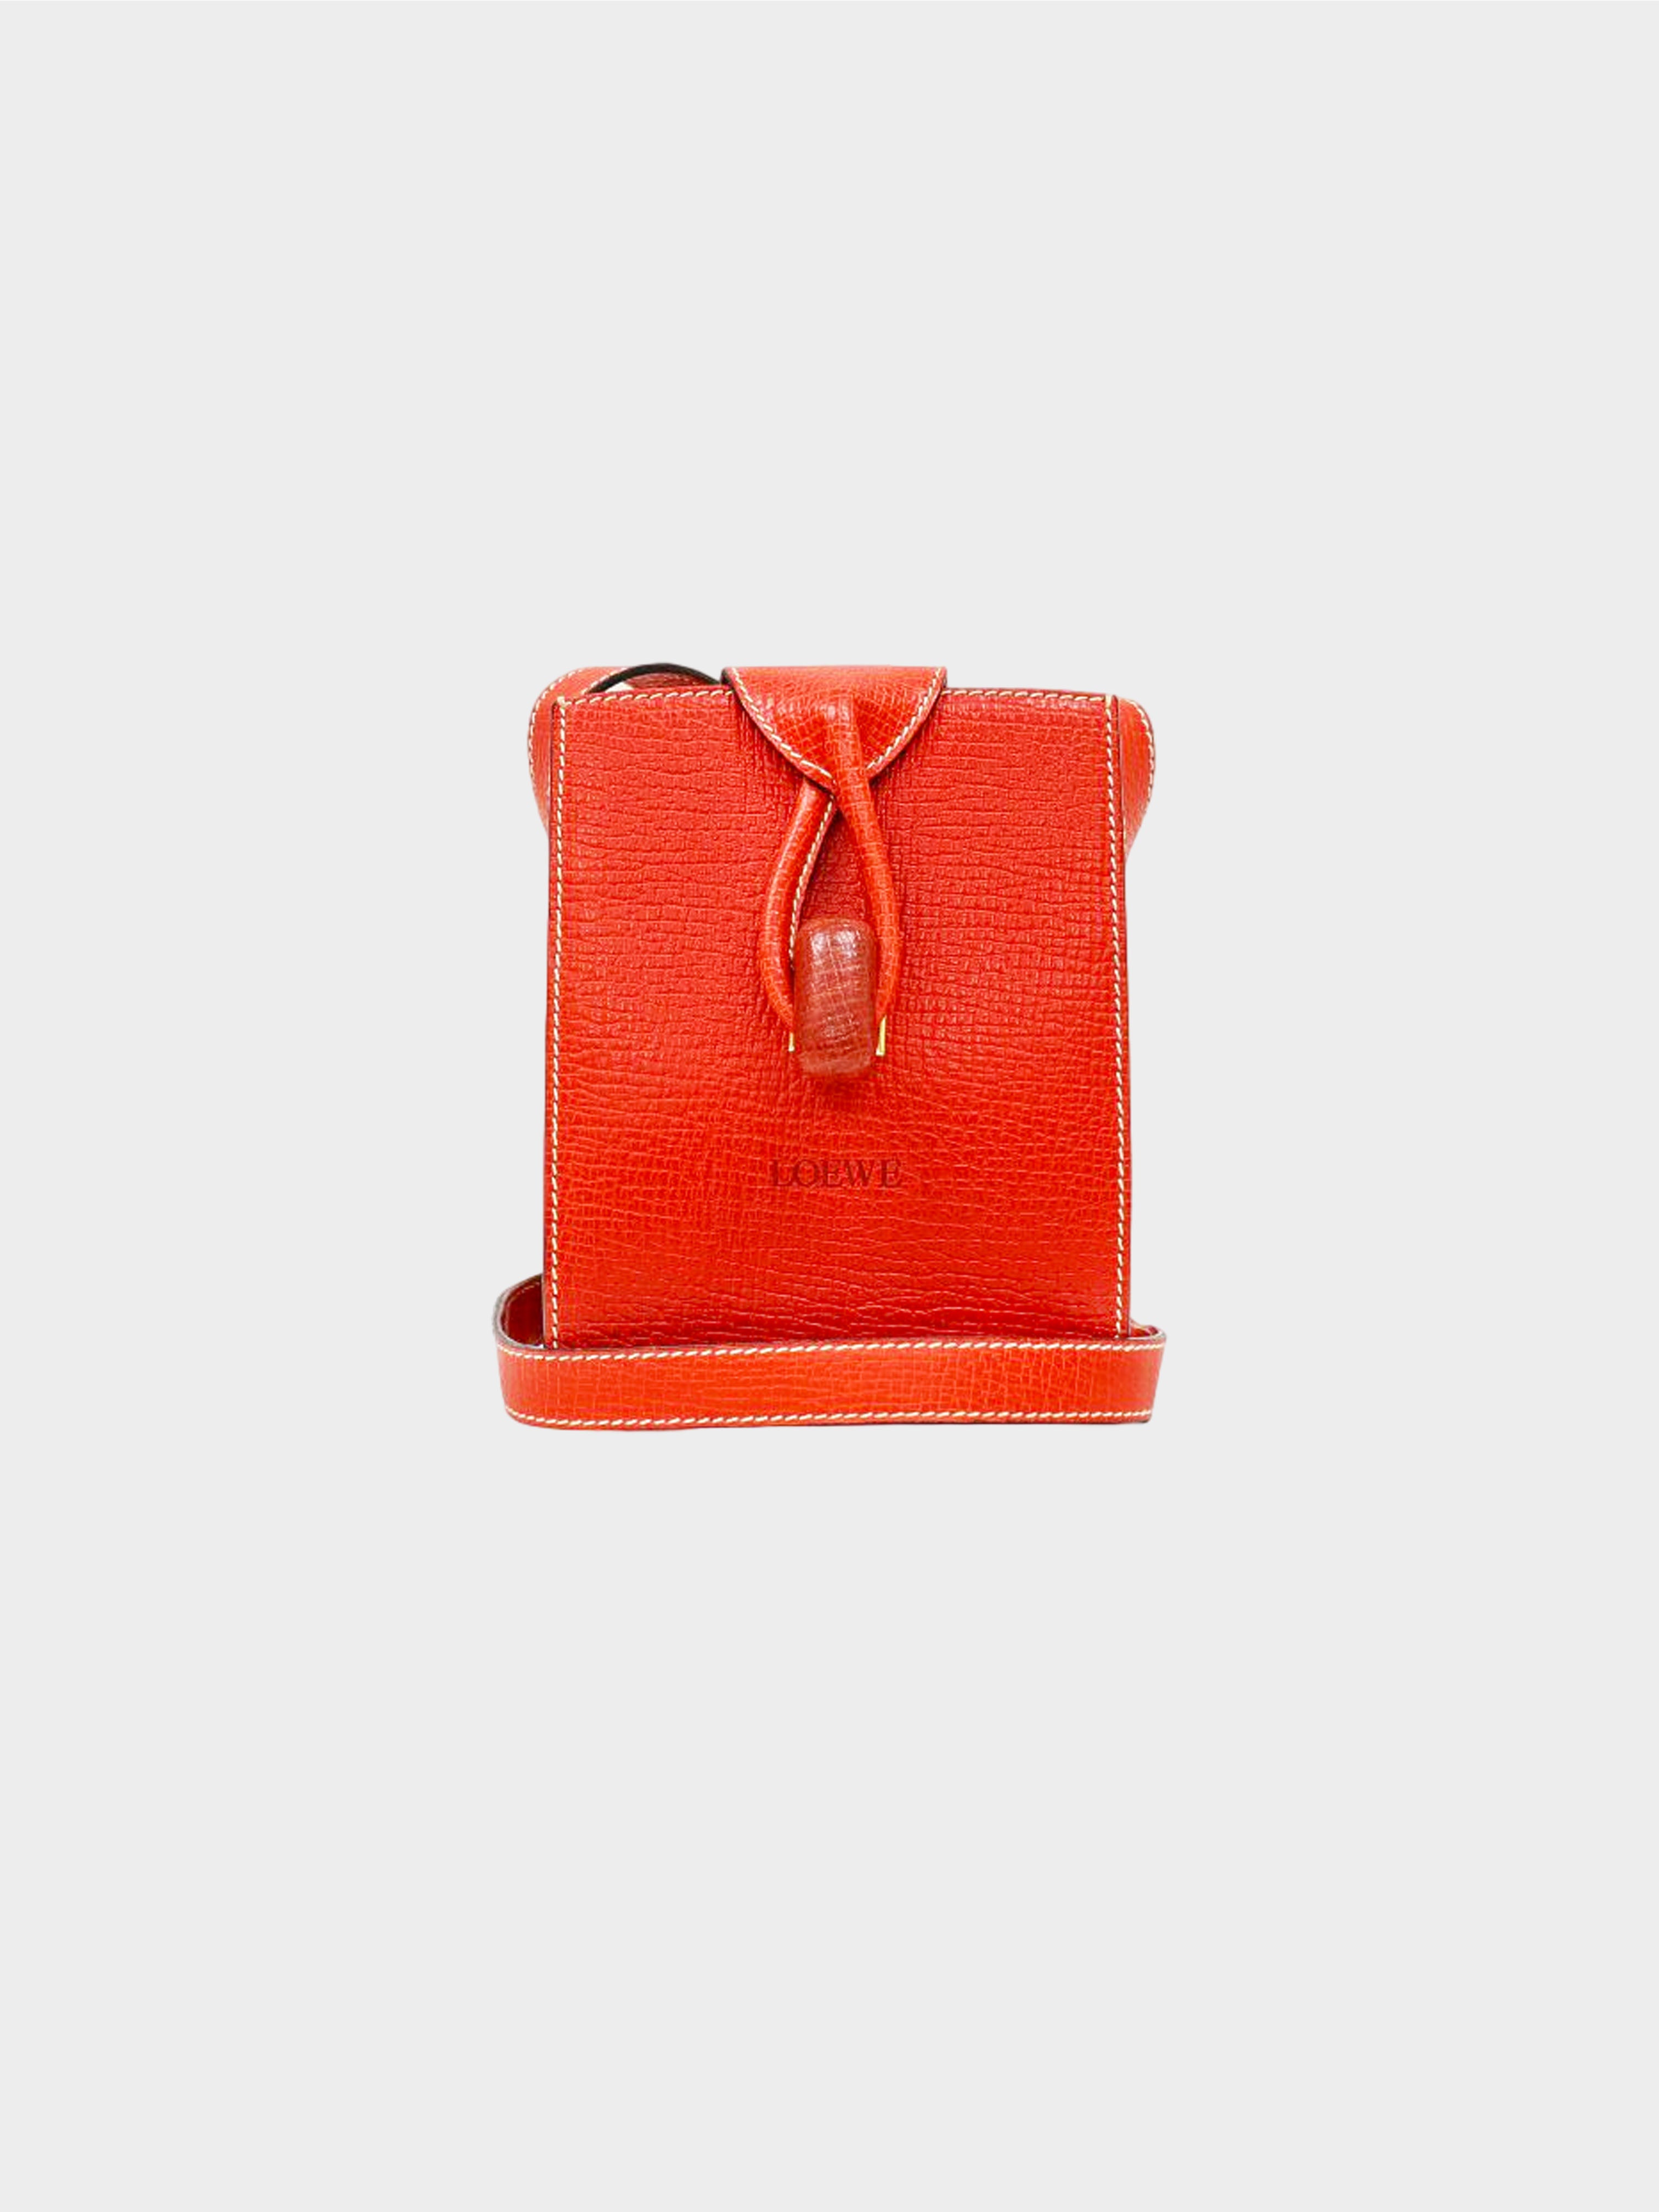 Loewe 2010s Red Mini Toggle Shoulder Bag